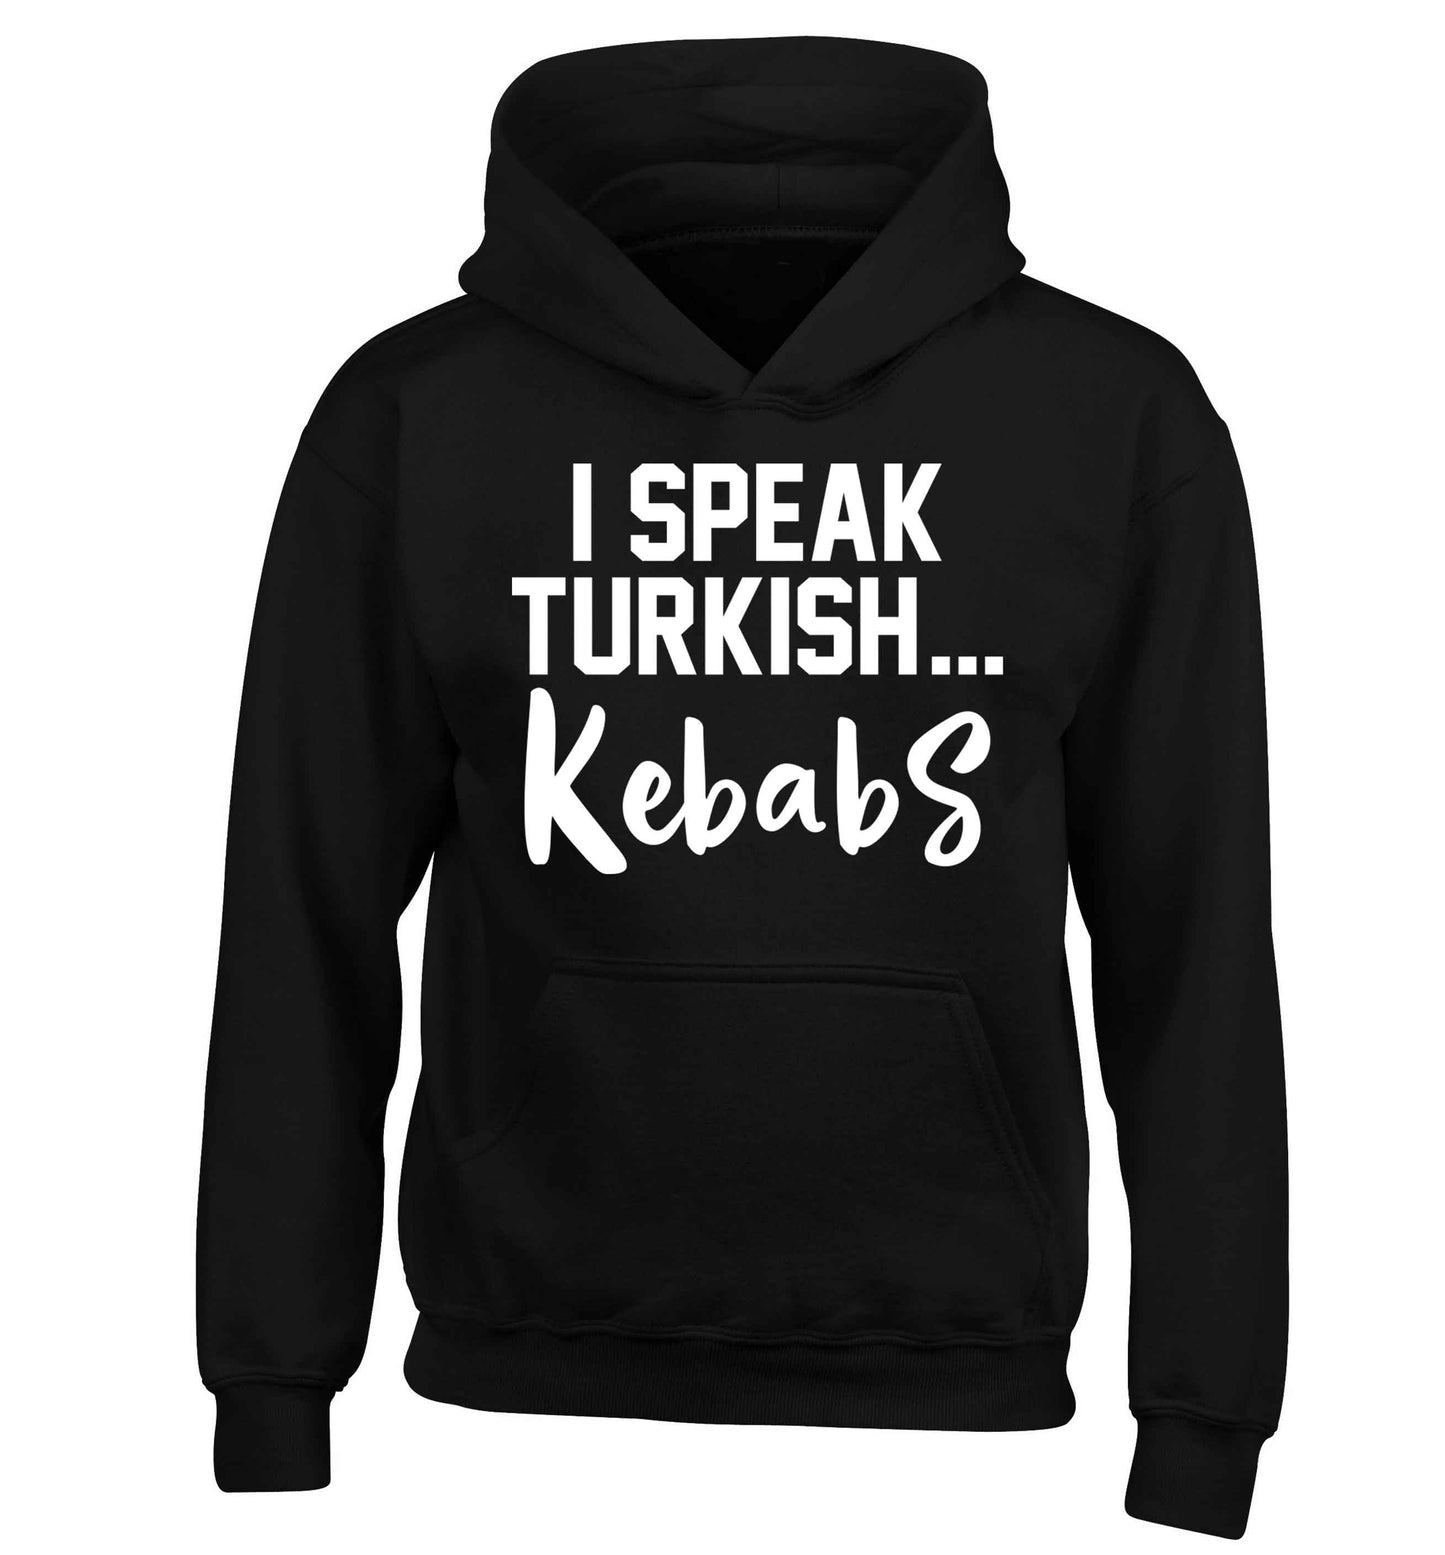 I speak Turkish...kebabs children's black hoodie 12-13 Years